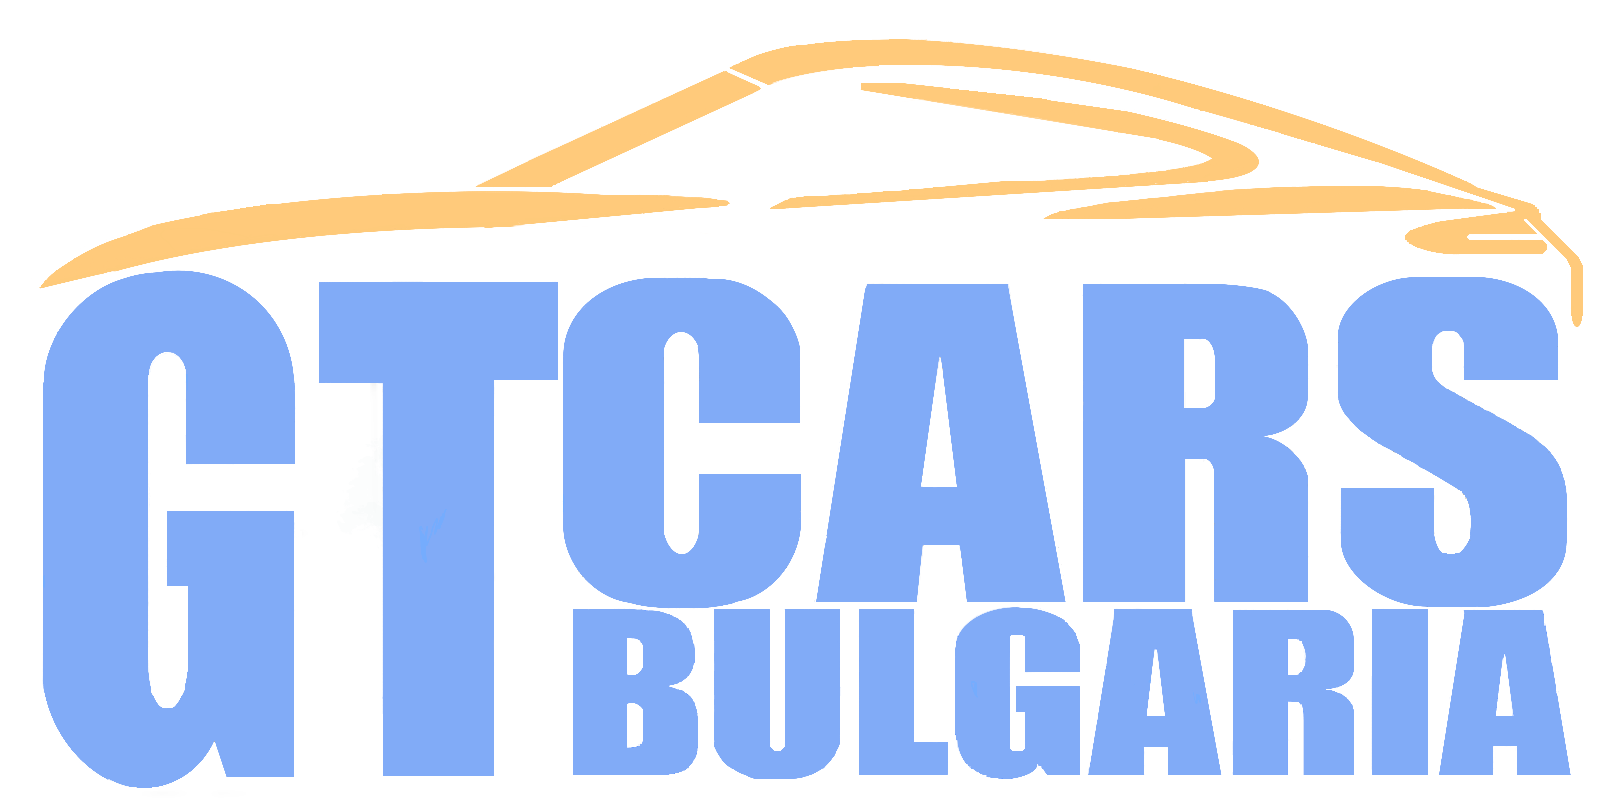 GT CARS Bulgaria